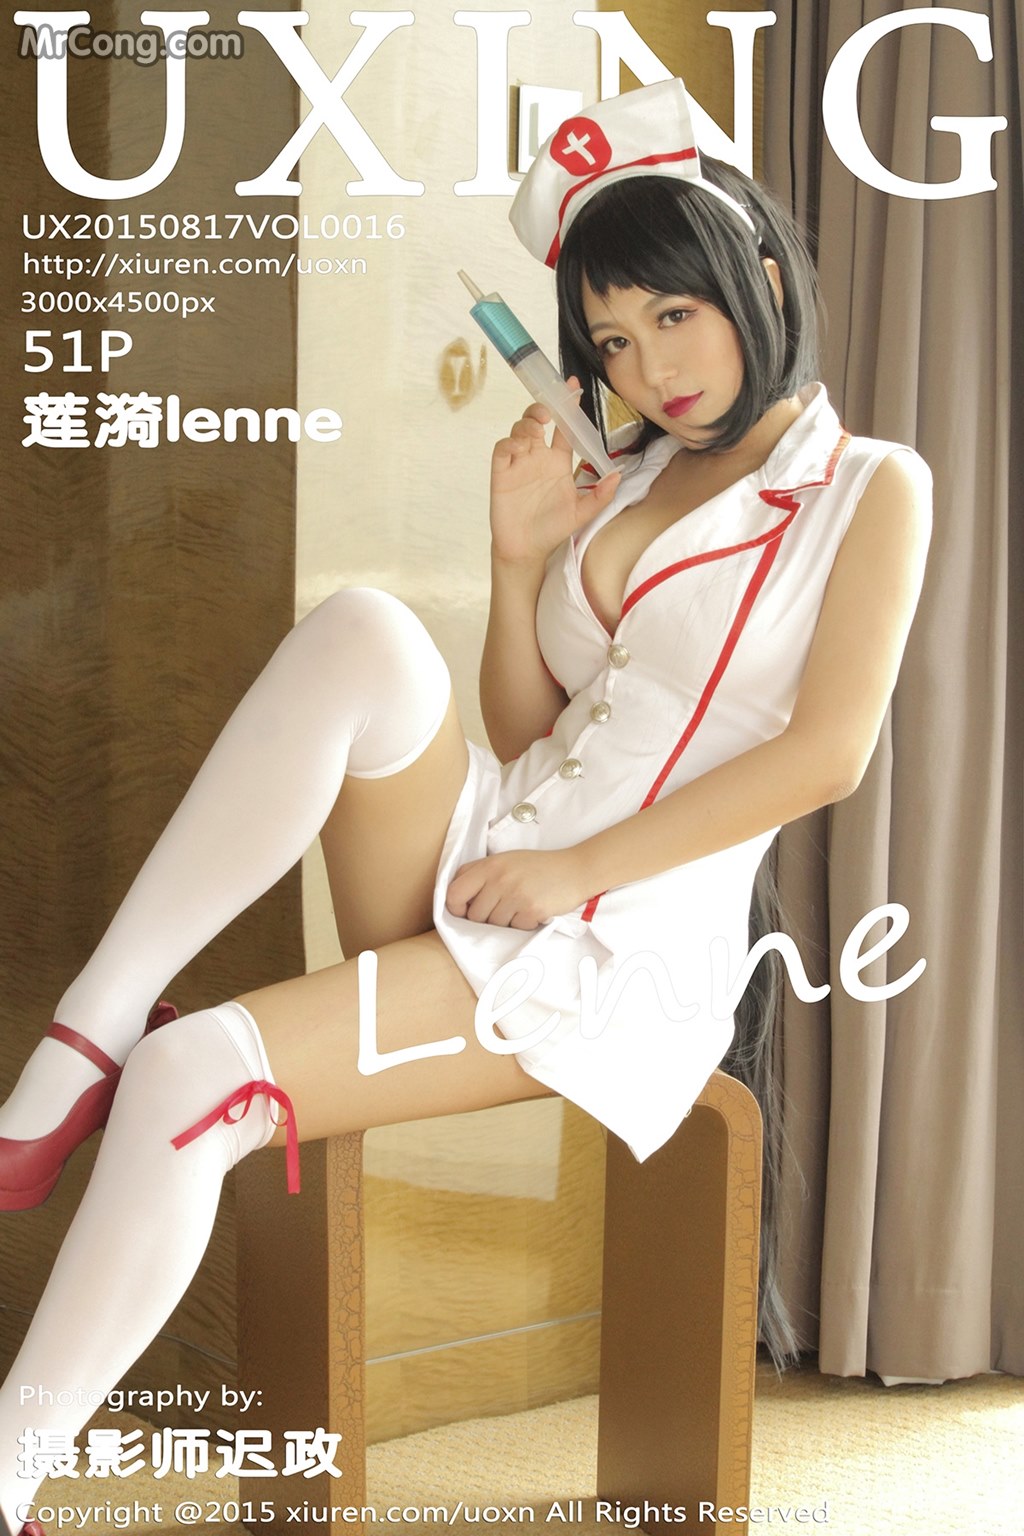 UXING Vol.016: Model Lenne (莲 漪) (52 photos) photo 1-0